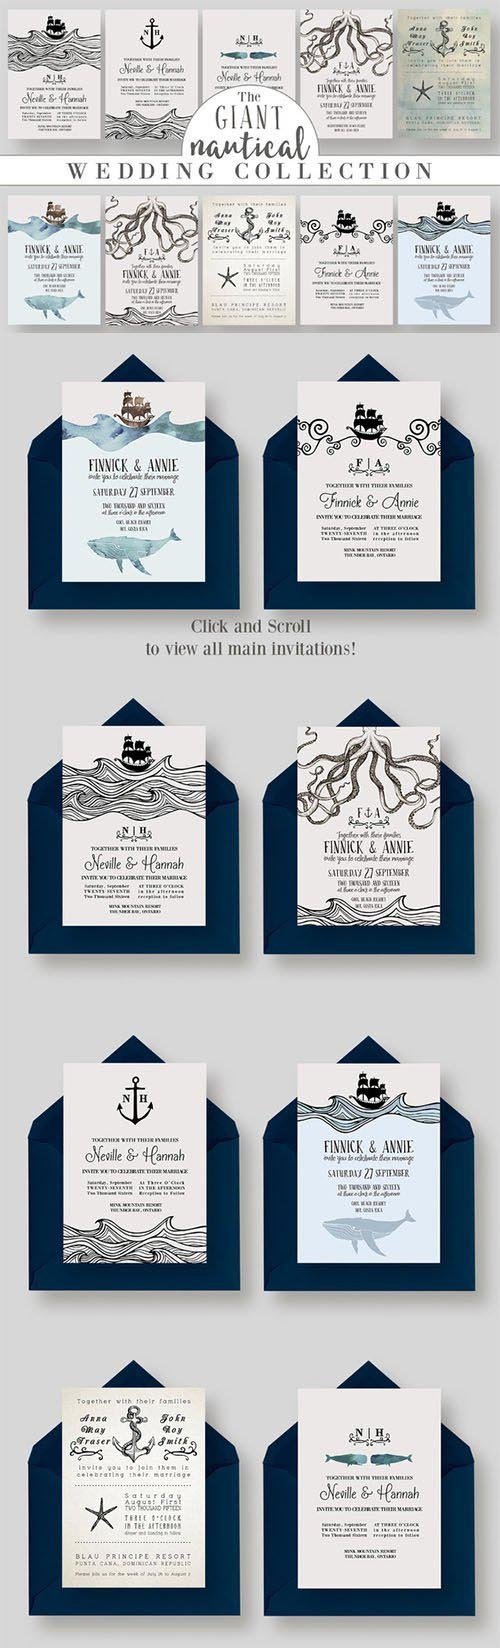 GIANT Nautical Wedding Collection - CM 340161